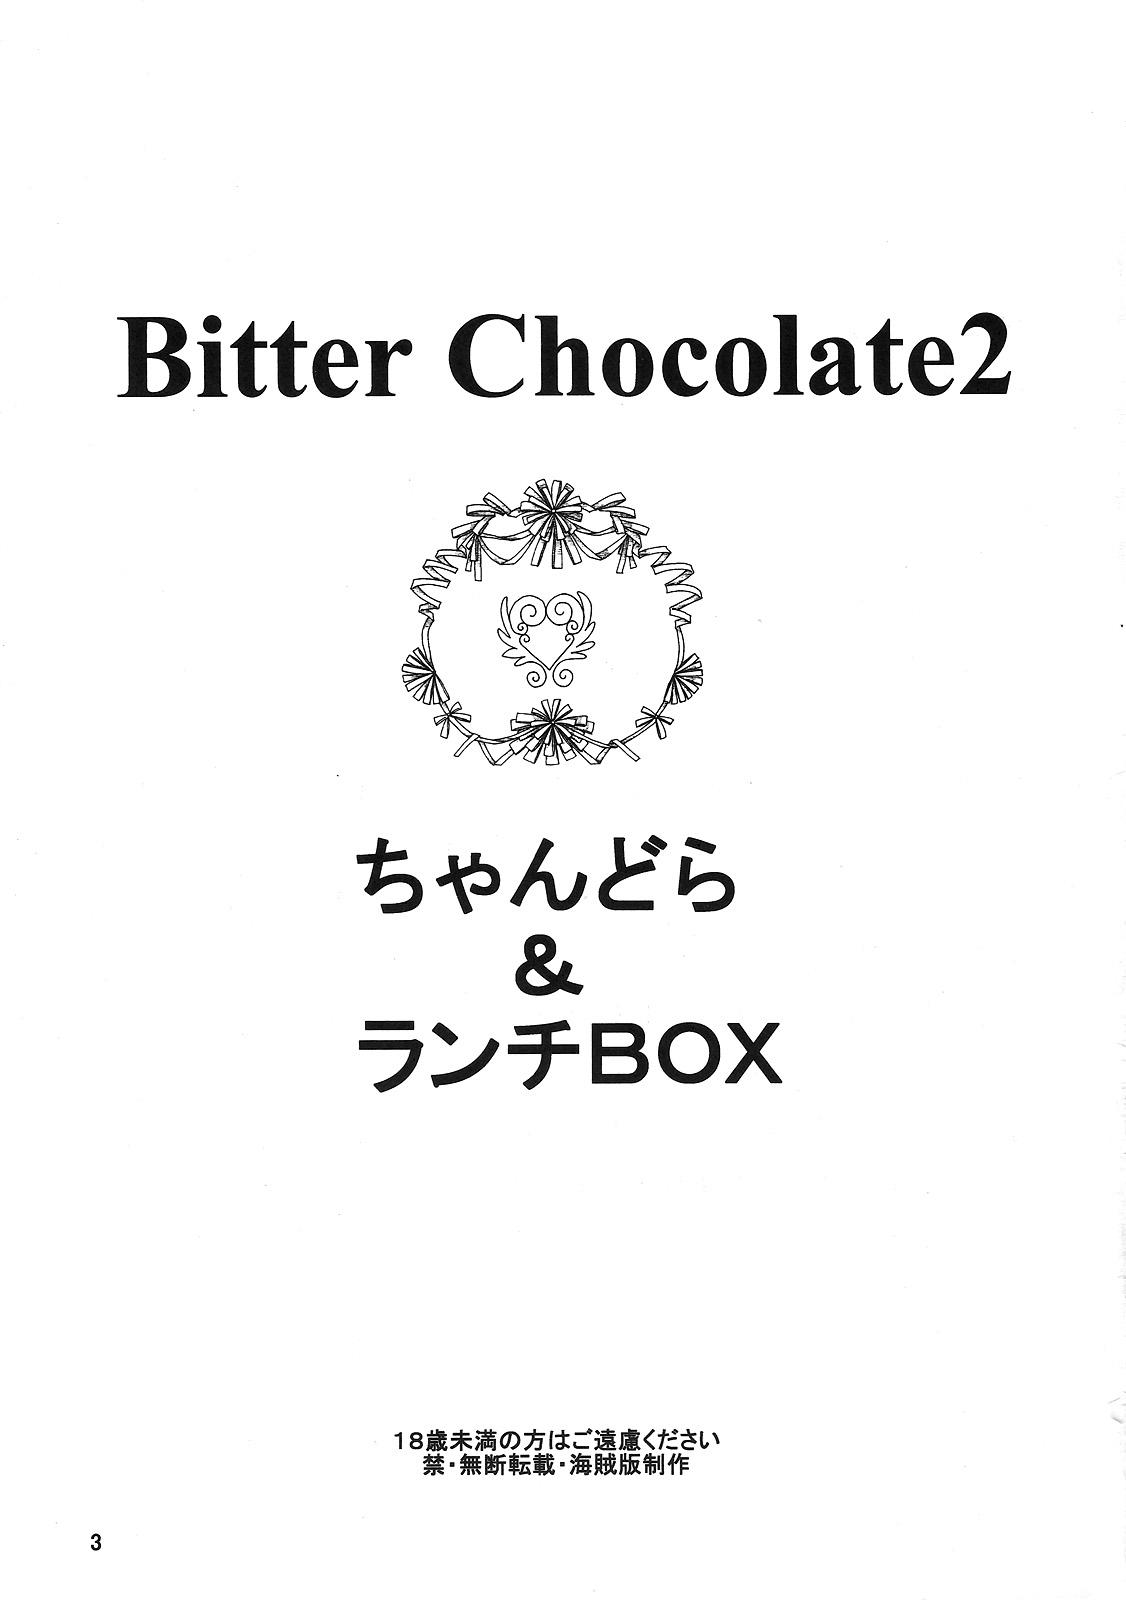 Lunch Box 71 - Bitter Chocolate 2 1